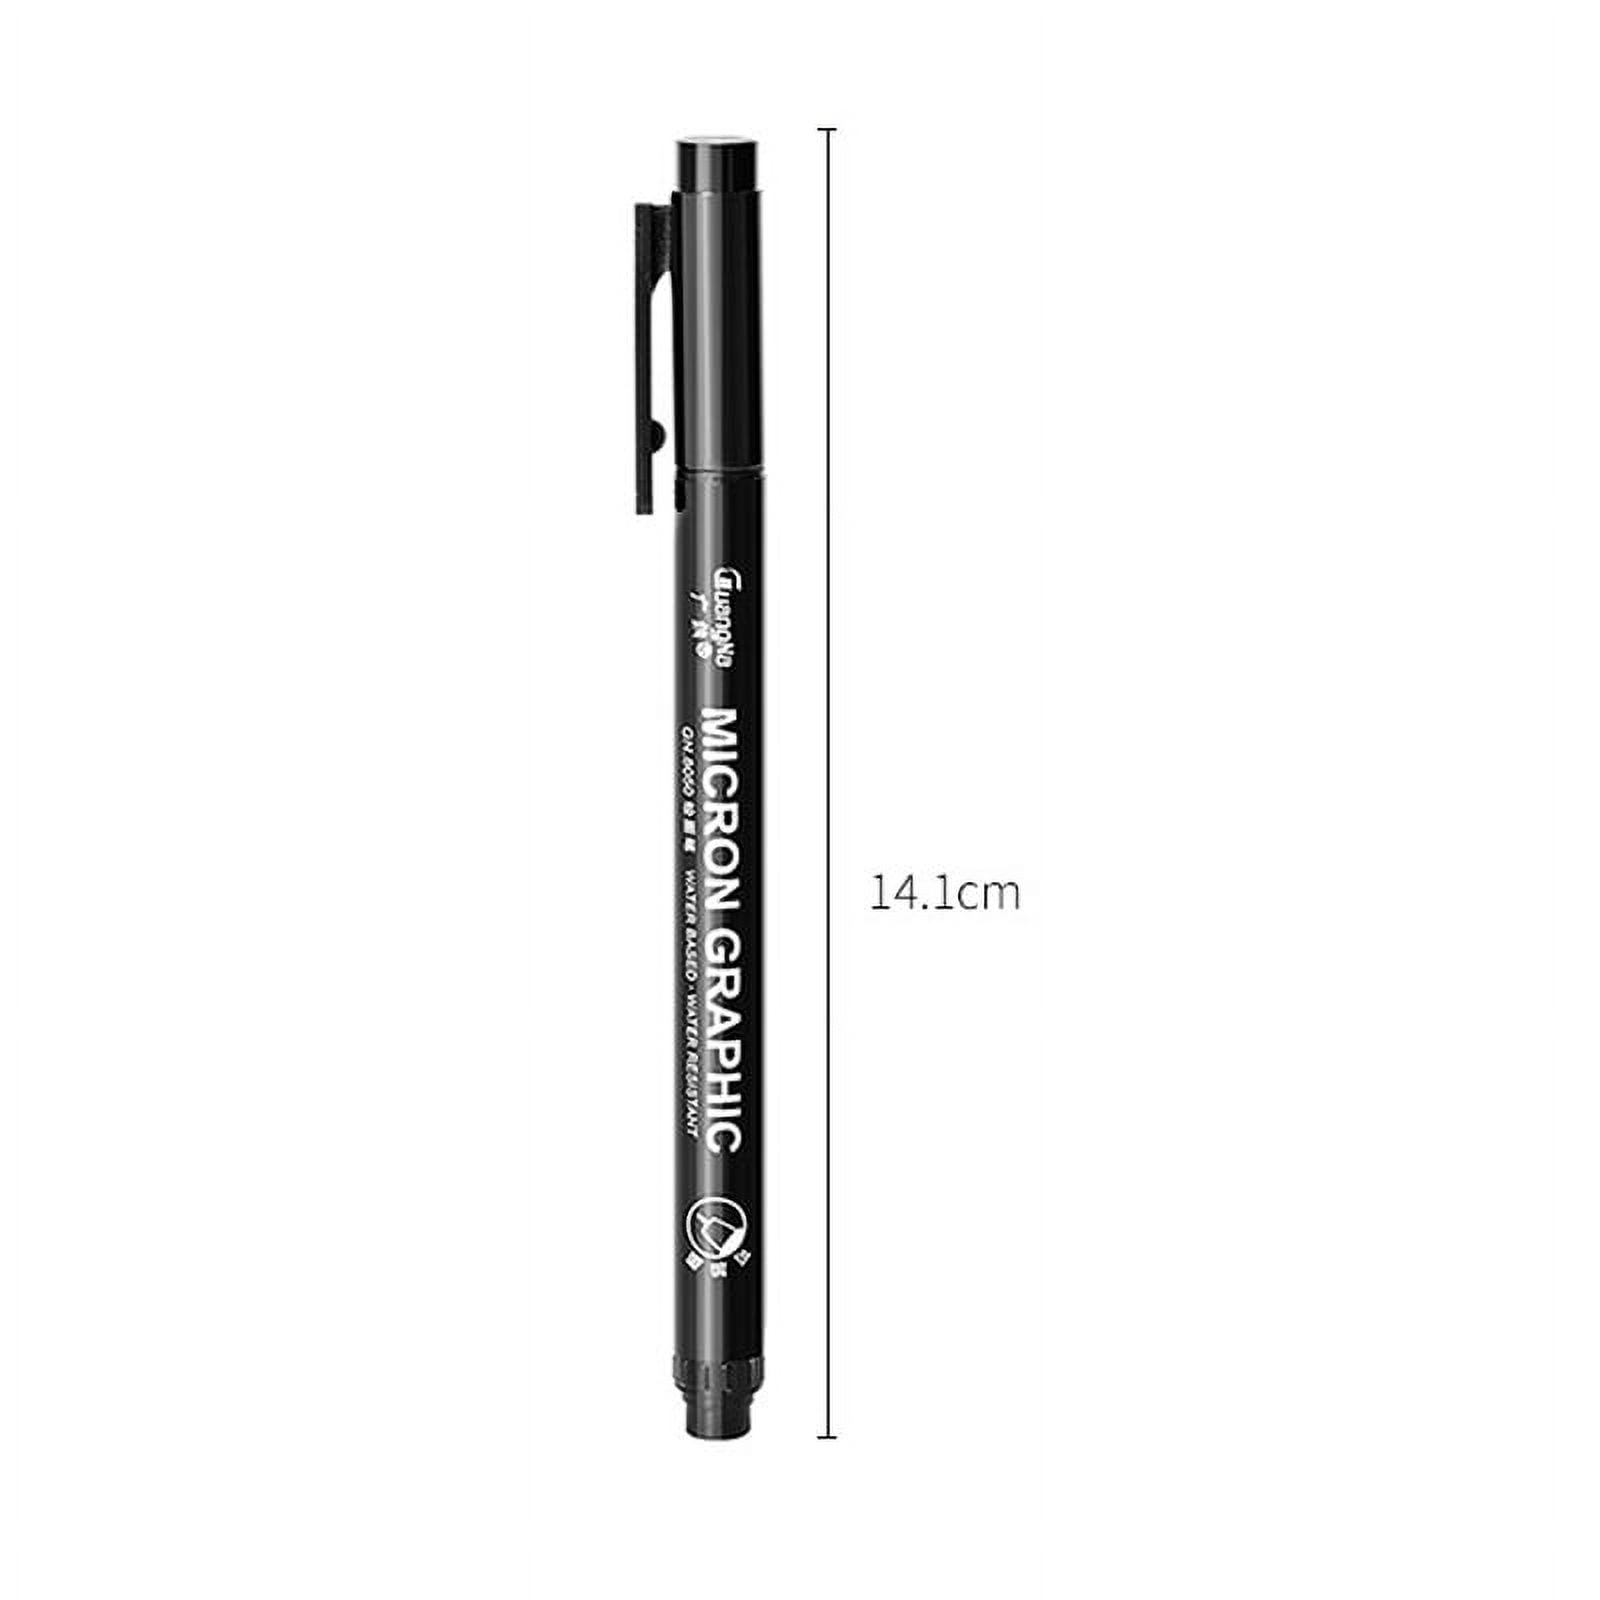 Easy black pen art/ doodle art / draw with me - YouTube | Pen art doodle,  Ink pen drawings, Pen art